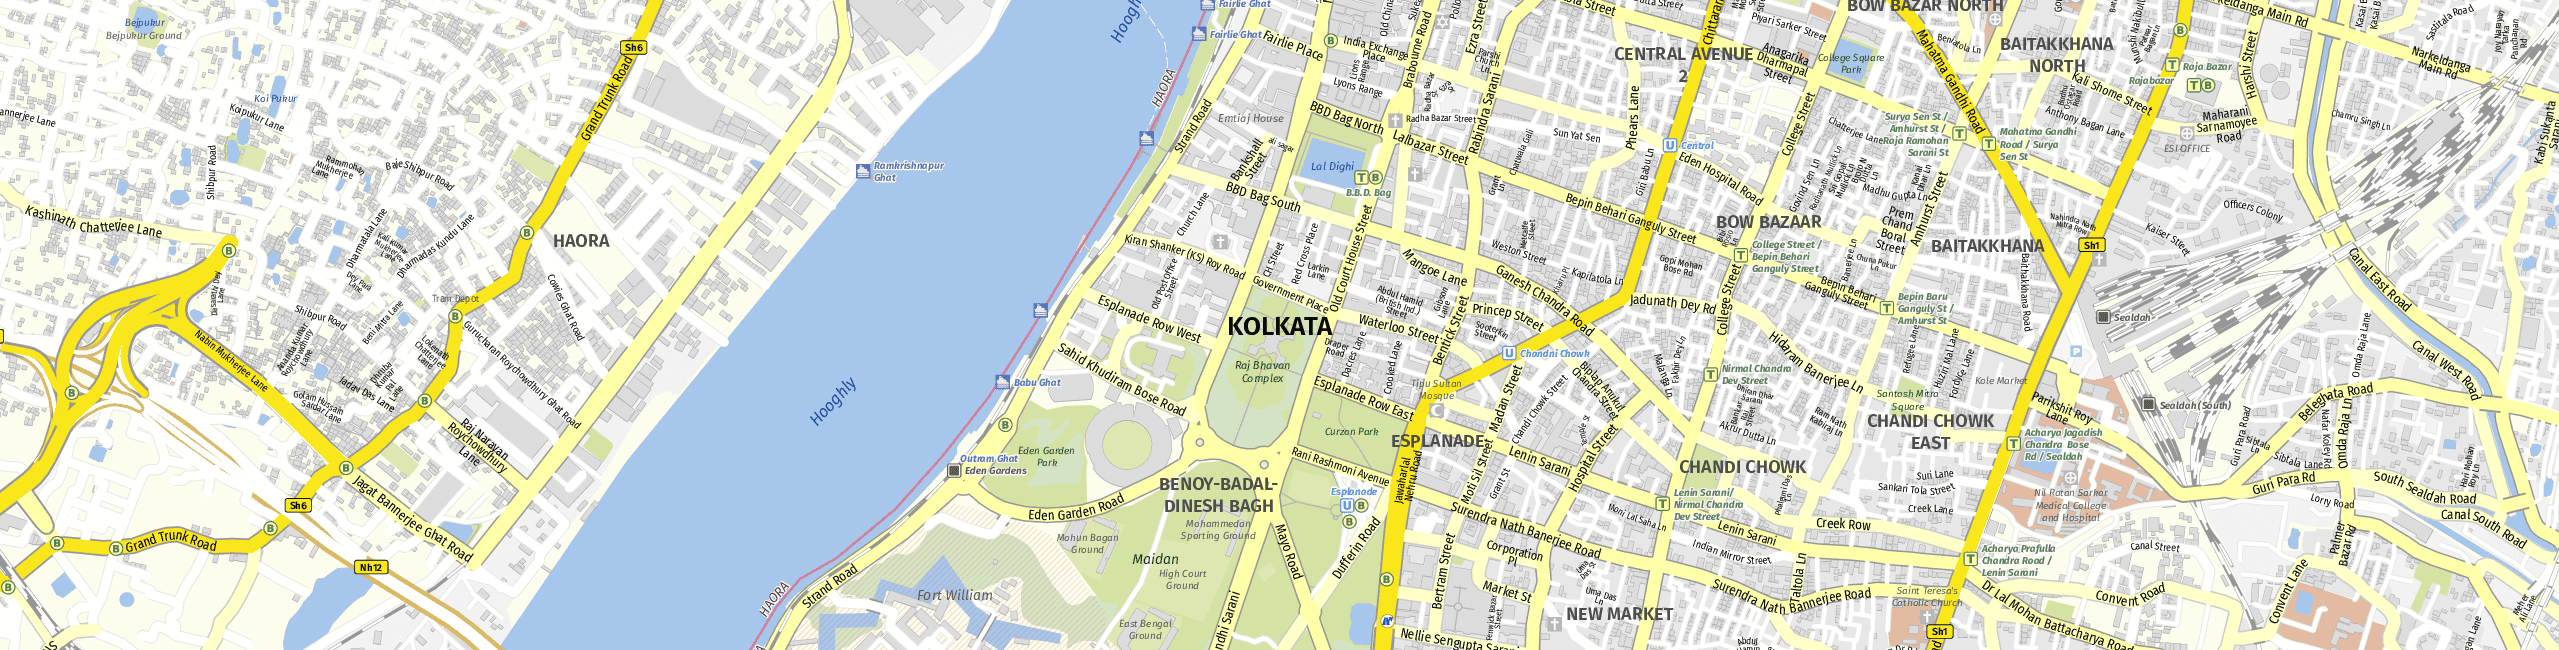 Stadtplan Kolkata zum Downloaden.